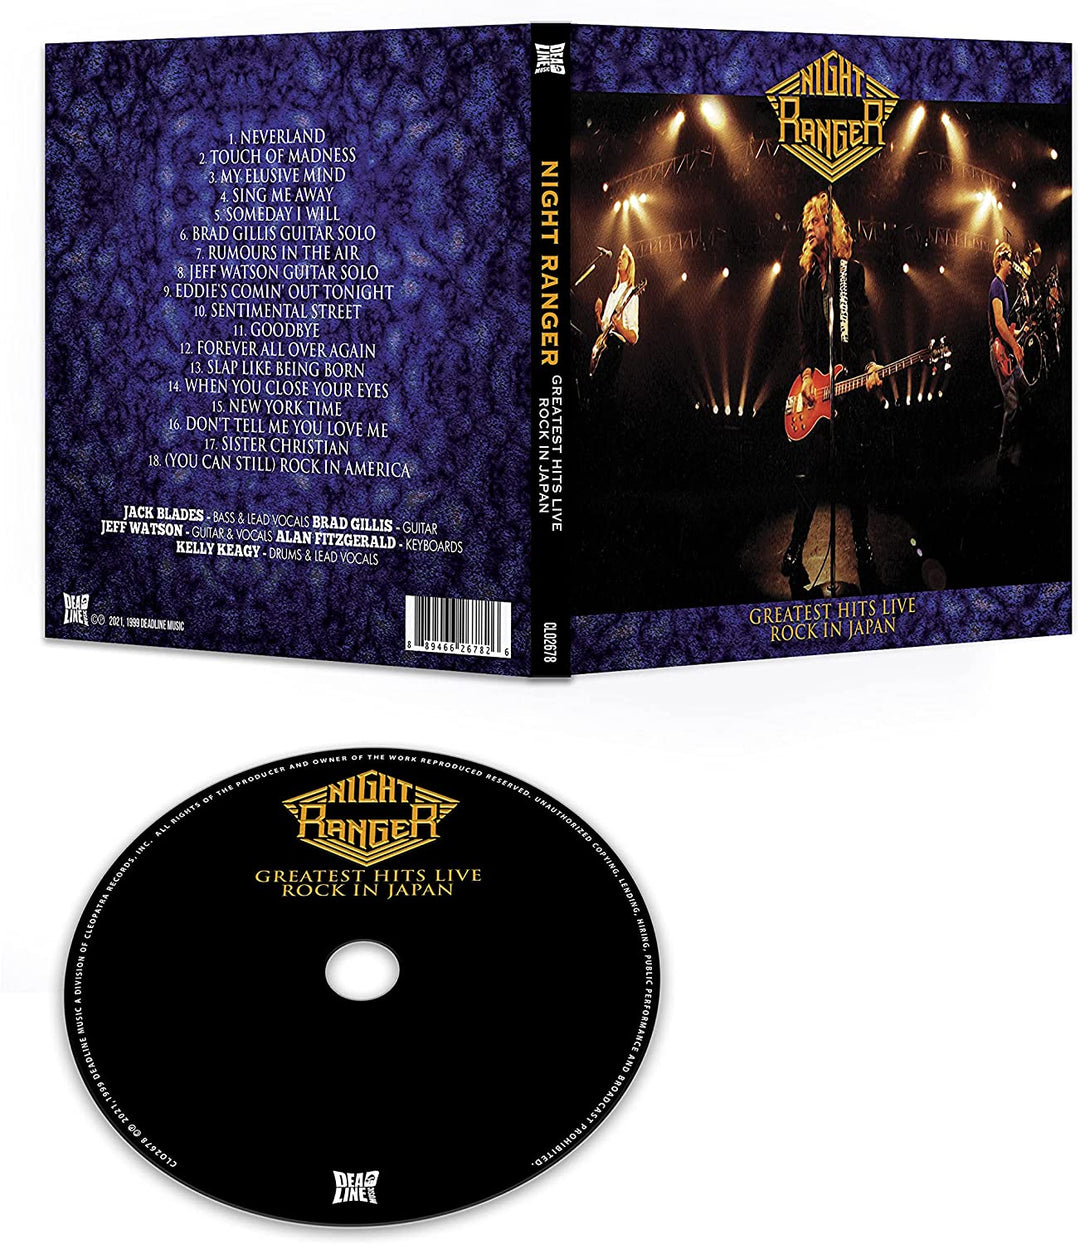 Night Ranger – Rock In Japan – Greatest Hits Live [Audio CD]